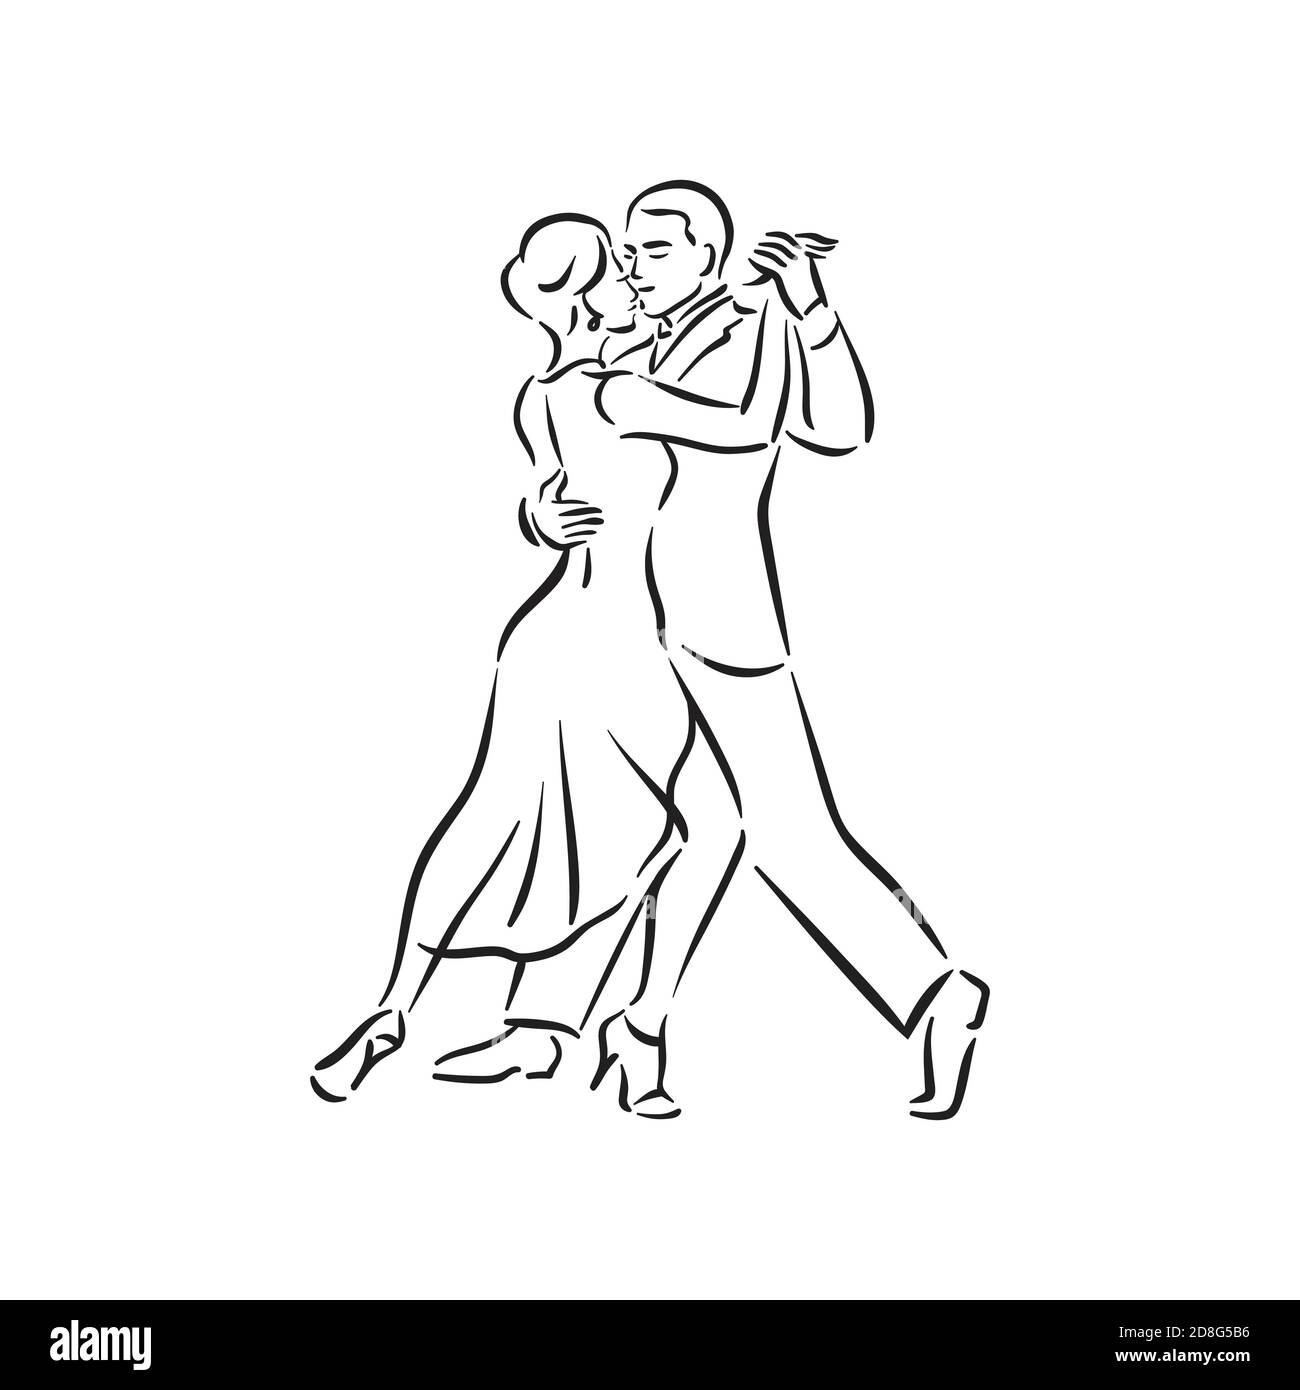 Argentine tango and salsa romance couple social pair dance illustration Stock Vector